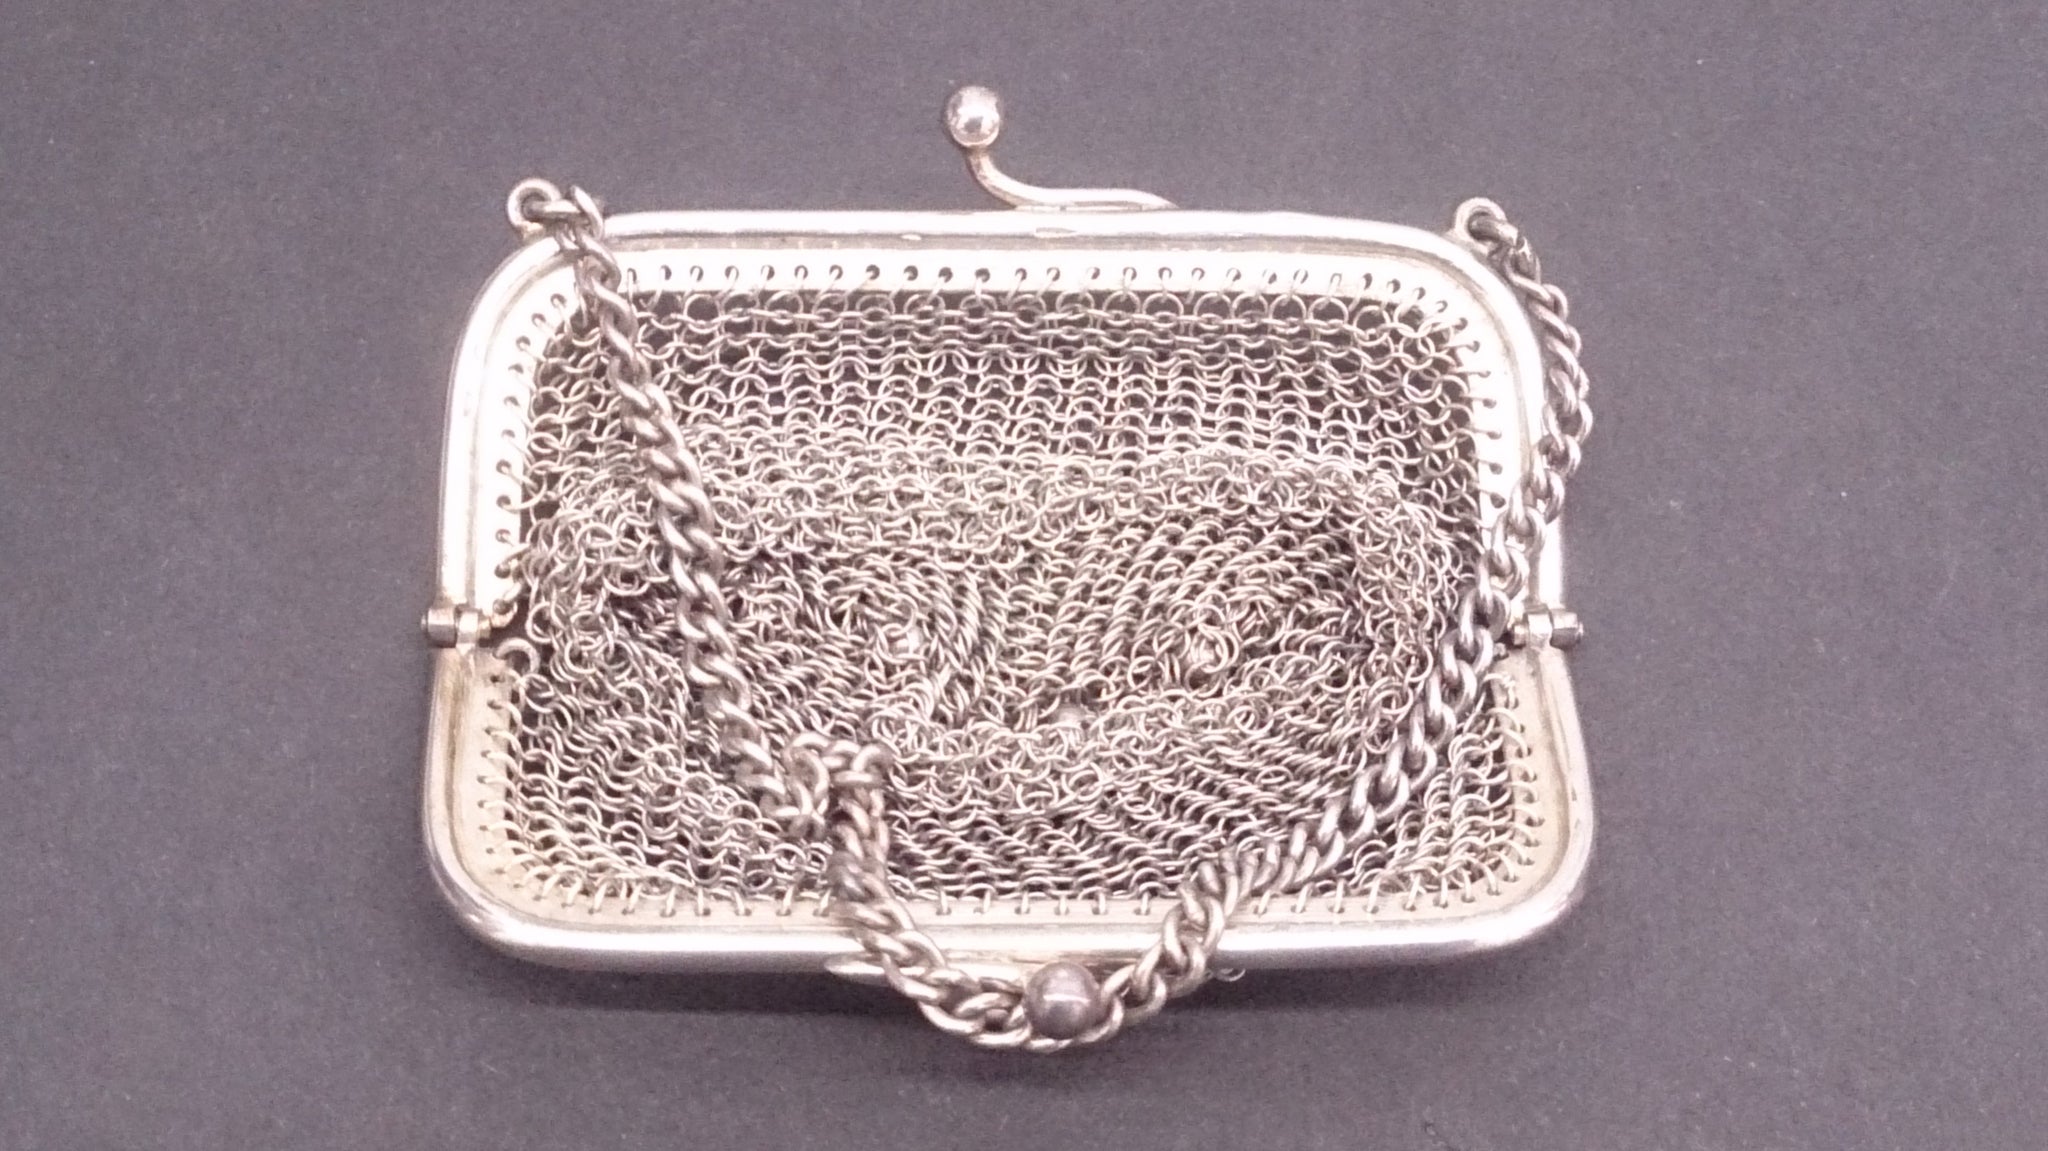 Buy Antique German Silver Purse, Victorian Silver Mesh Bag Online in India  - Etsy